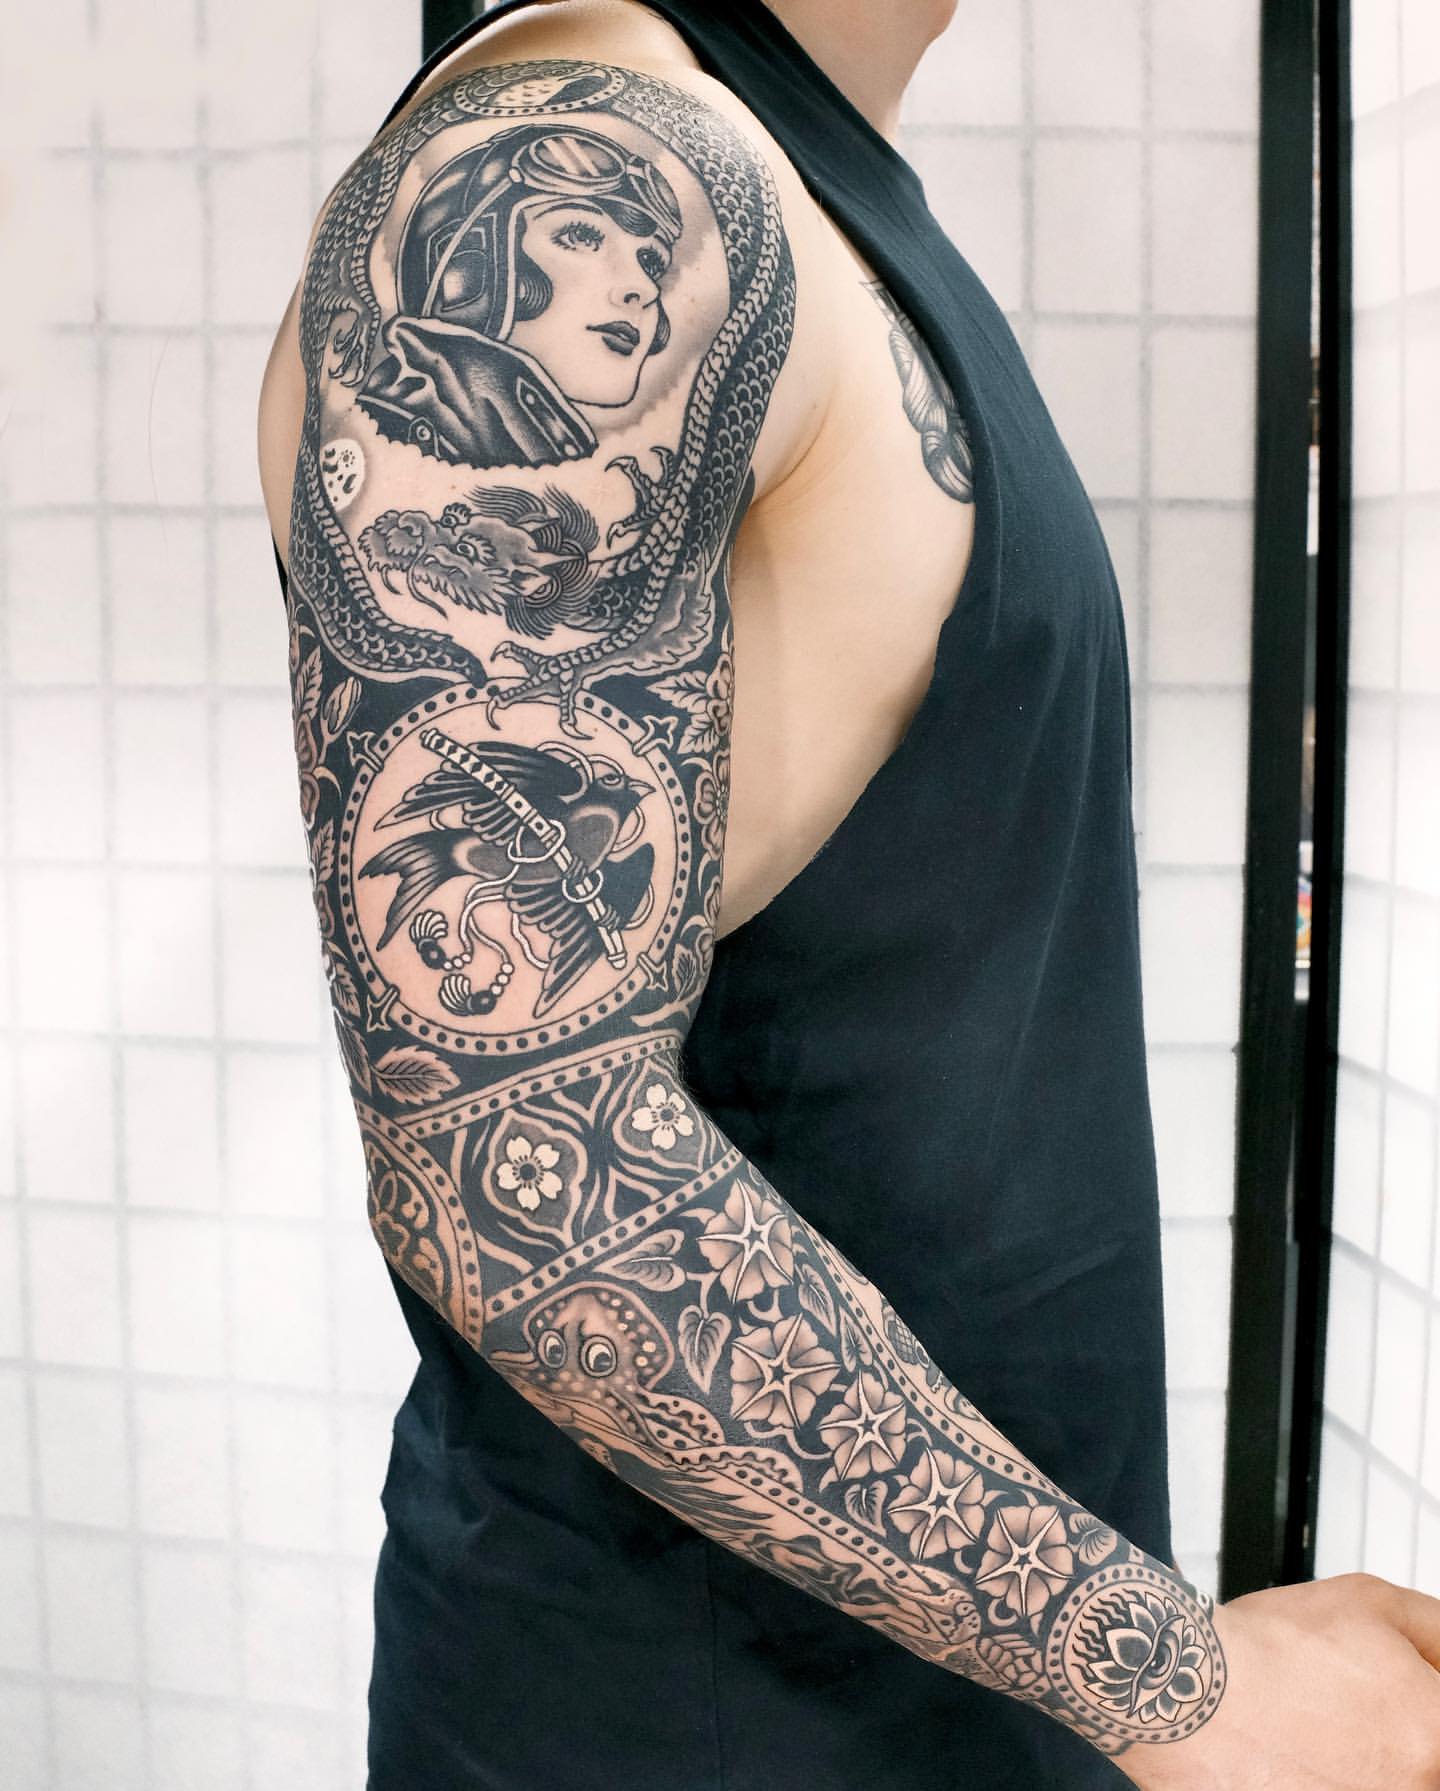 Hunting Eagle Shoulder Tattoo - Best Tattoo Ideas Gallery